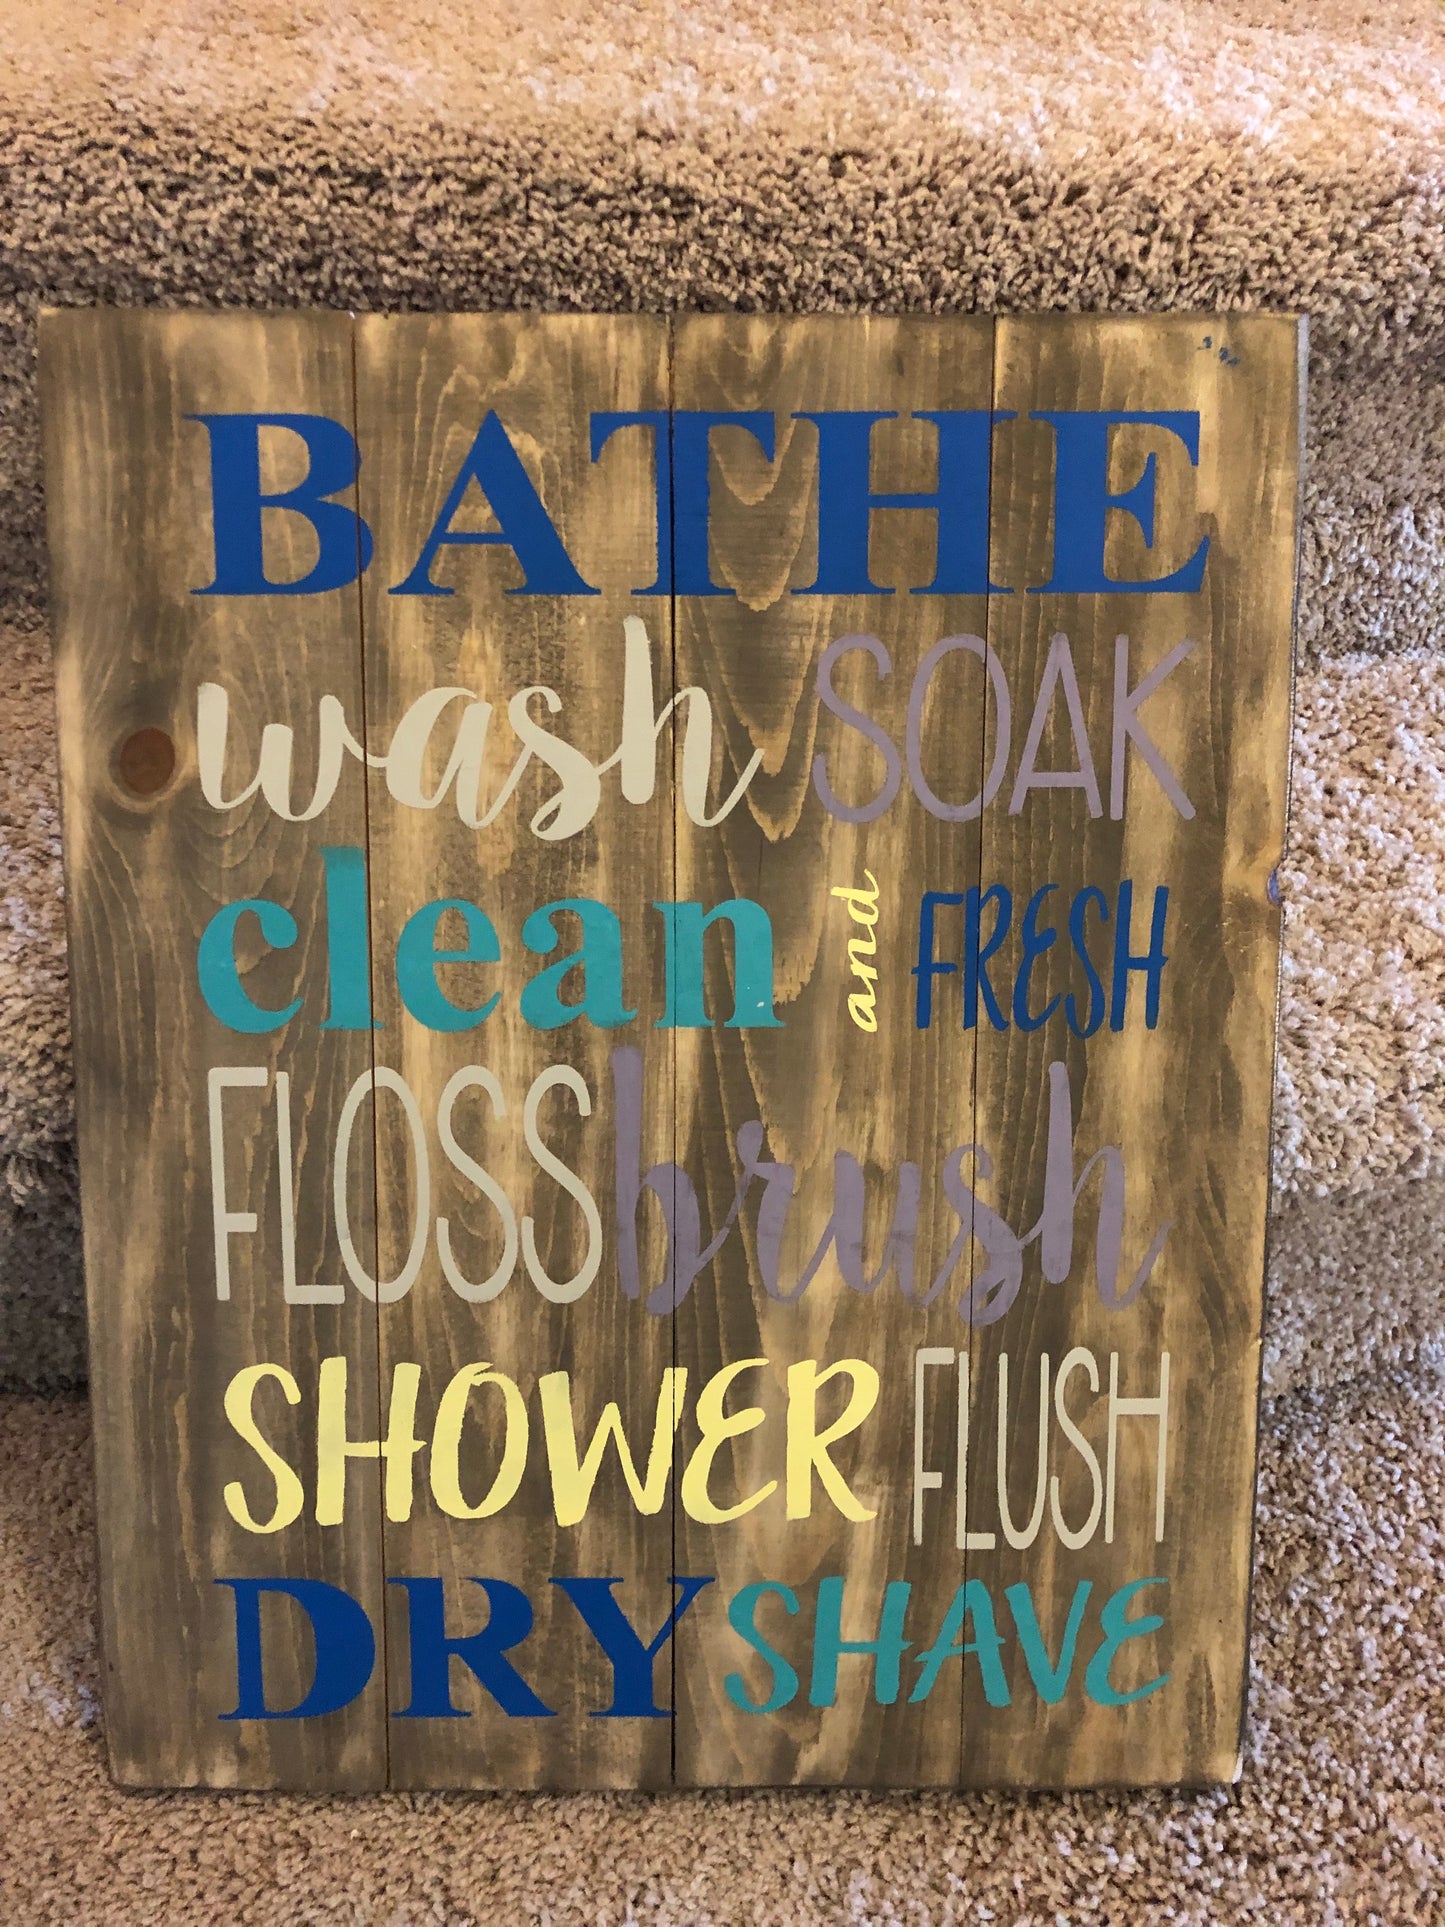 Bathe, wash, soak, clean and fresh